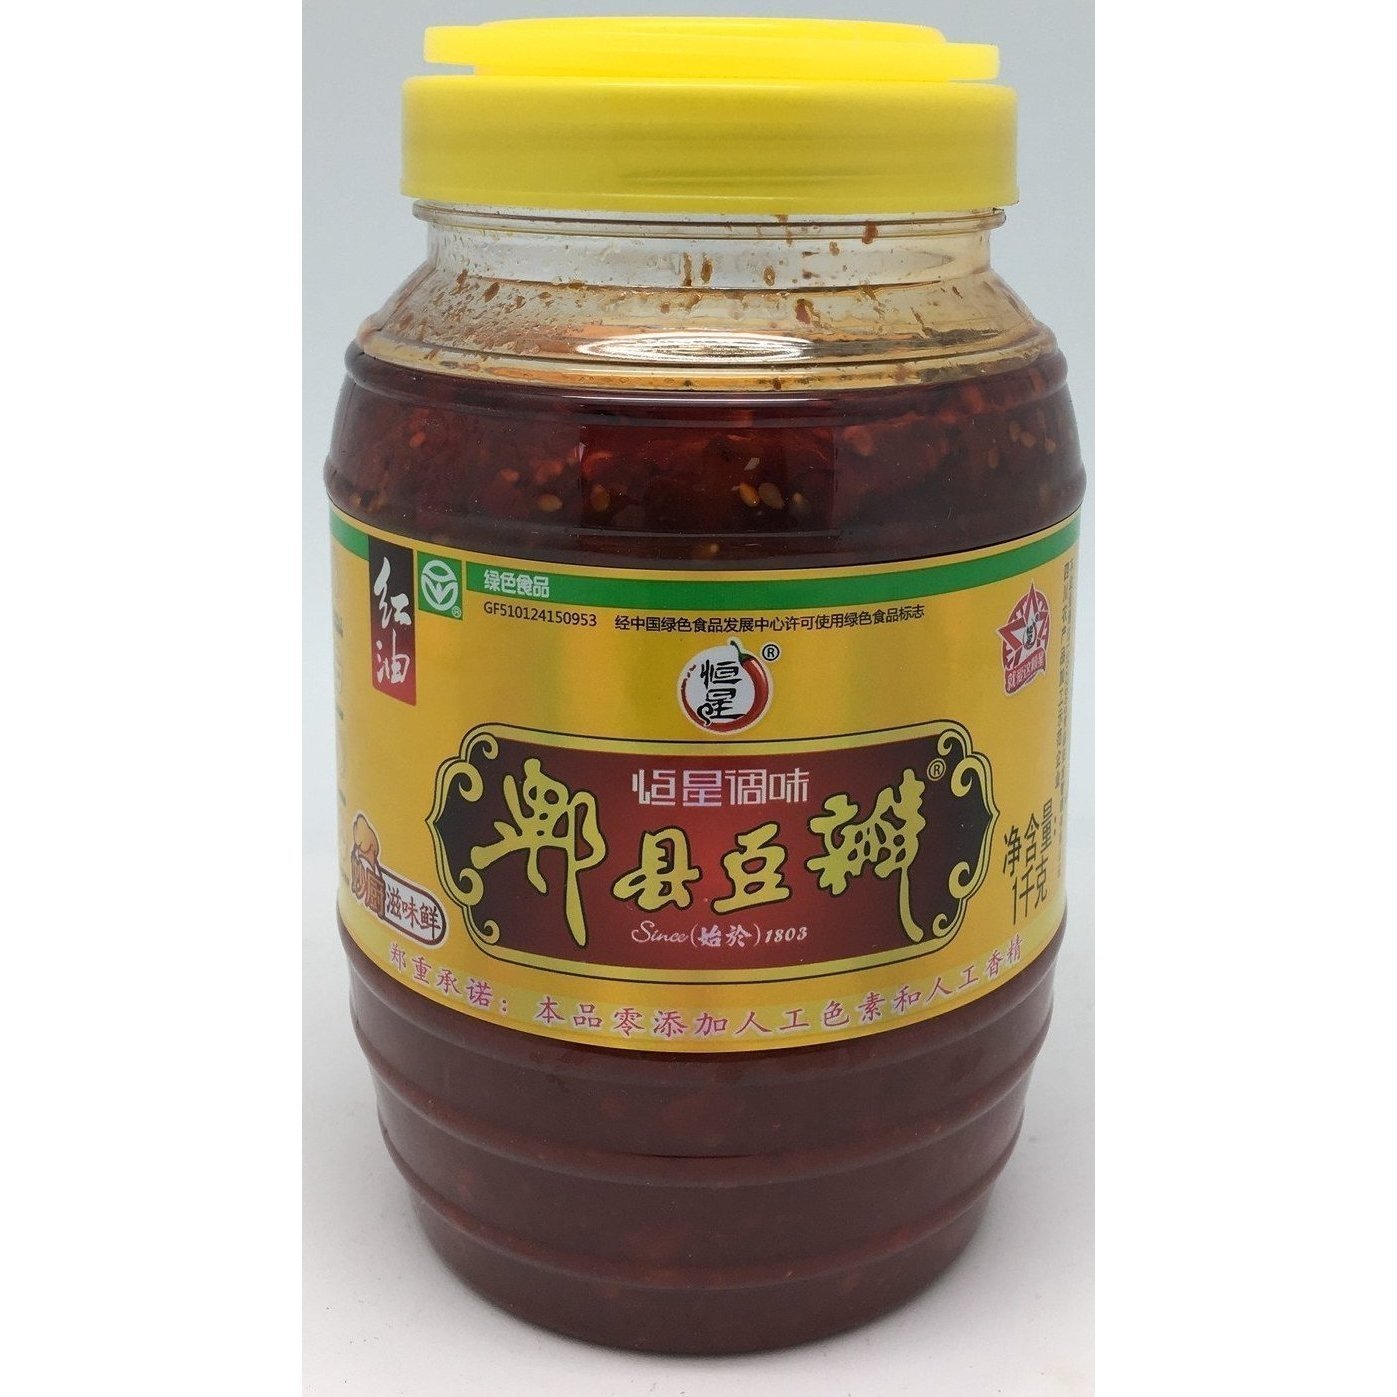 S023L Hang Seng Brand - Chilli Bean Sauce 1kg -  8 jar / 1CTN - New Eastland Pty Ltd - Asian food wholesalers